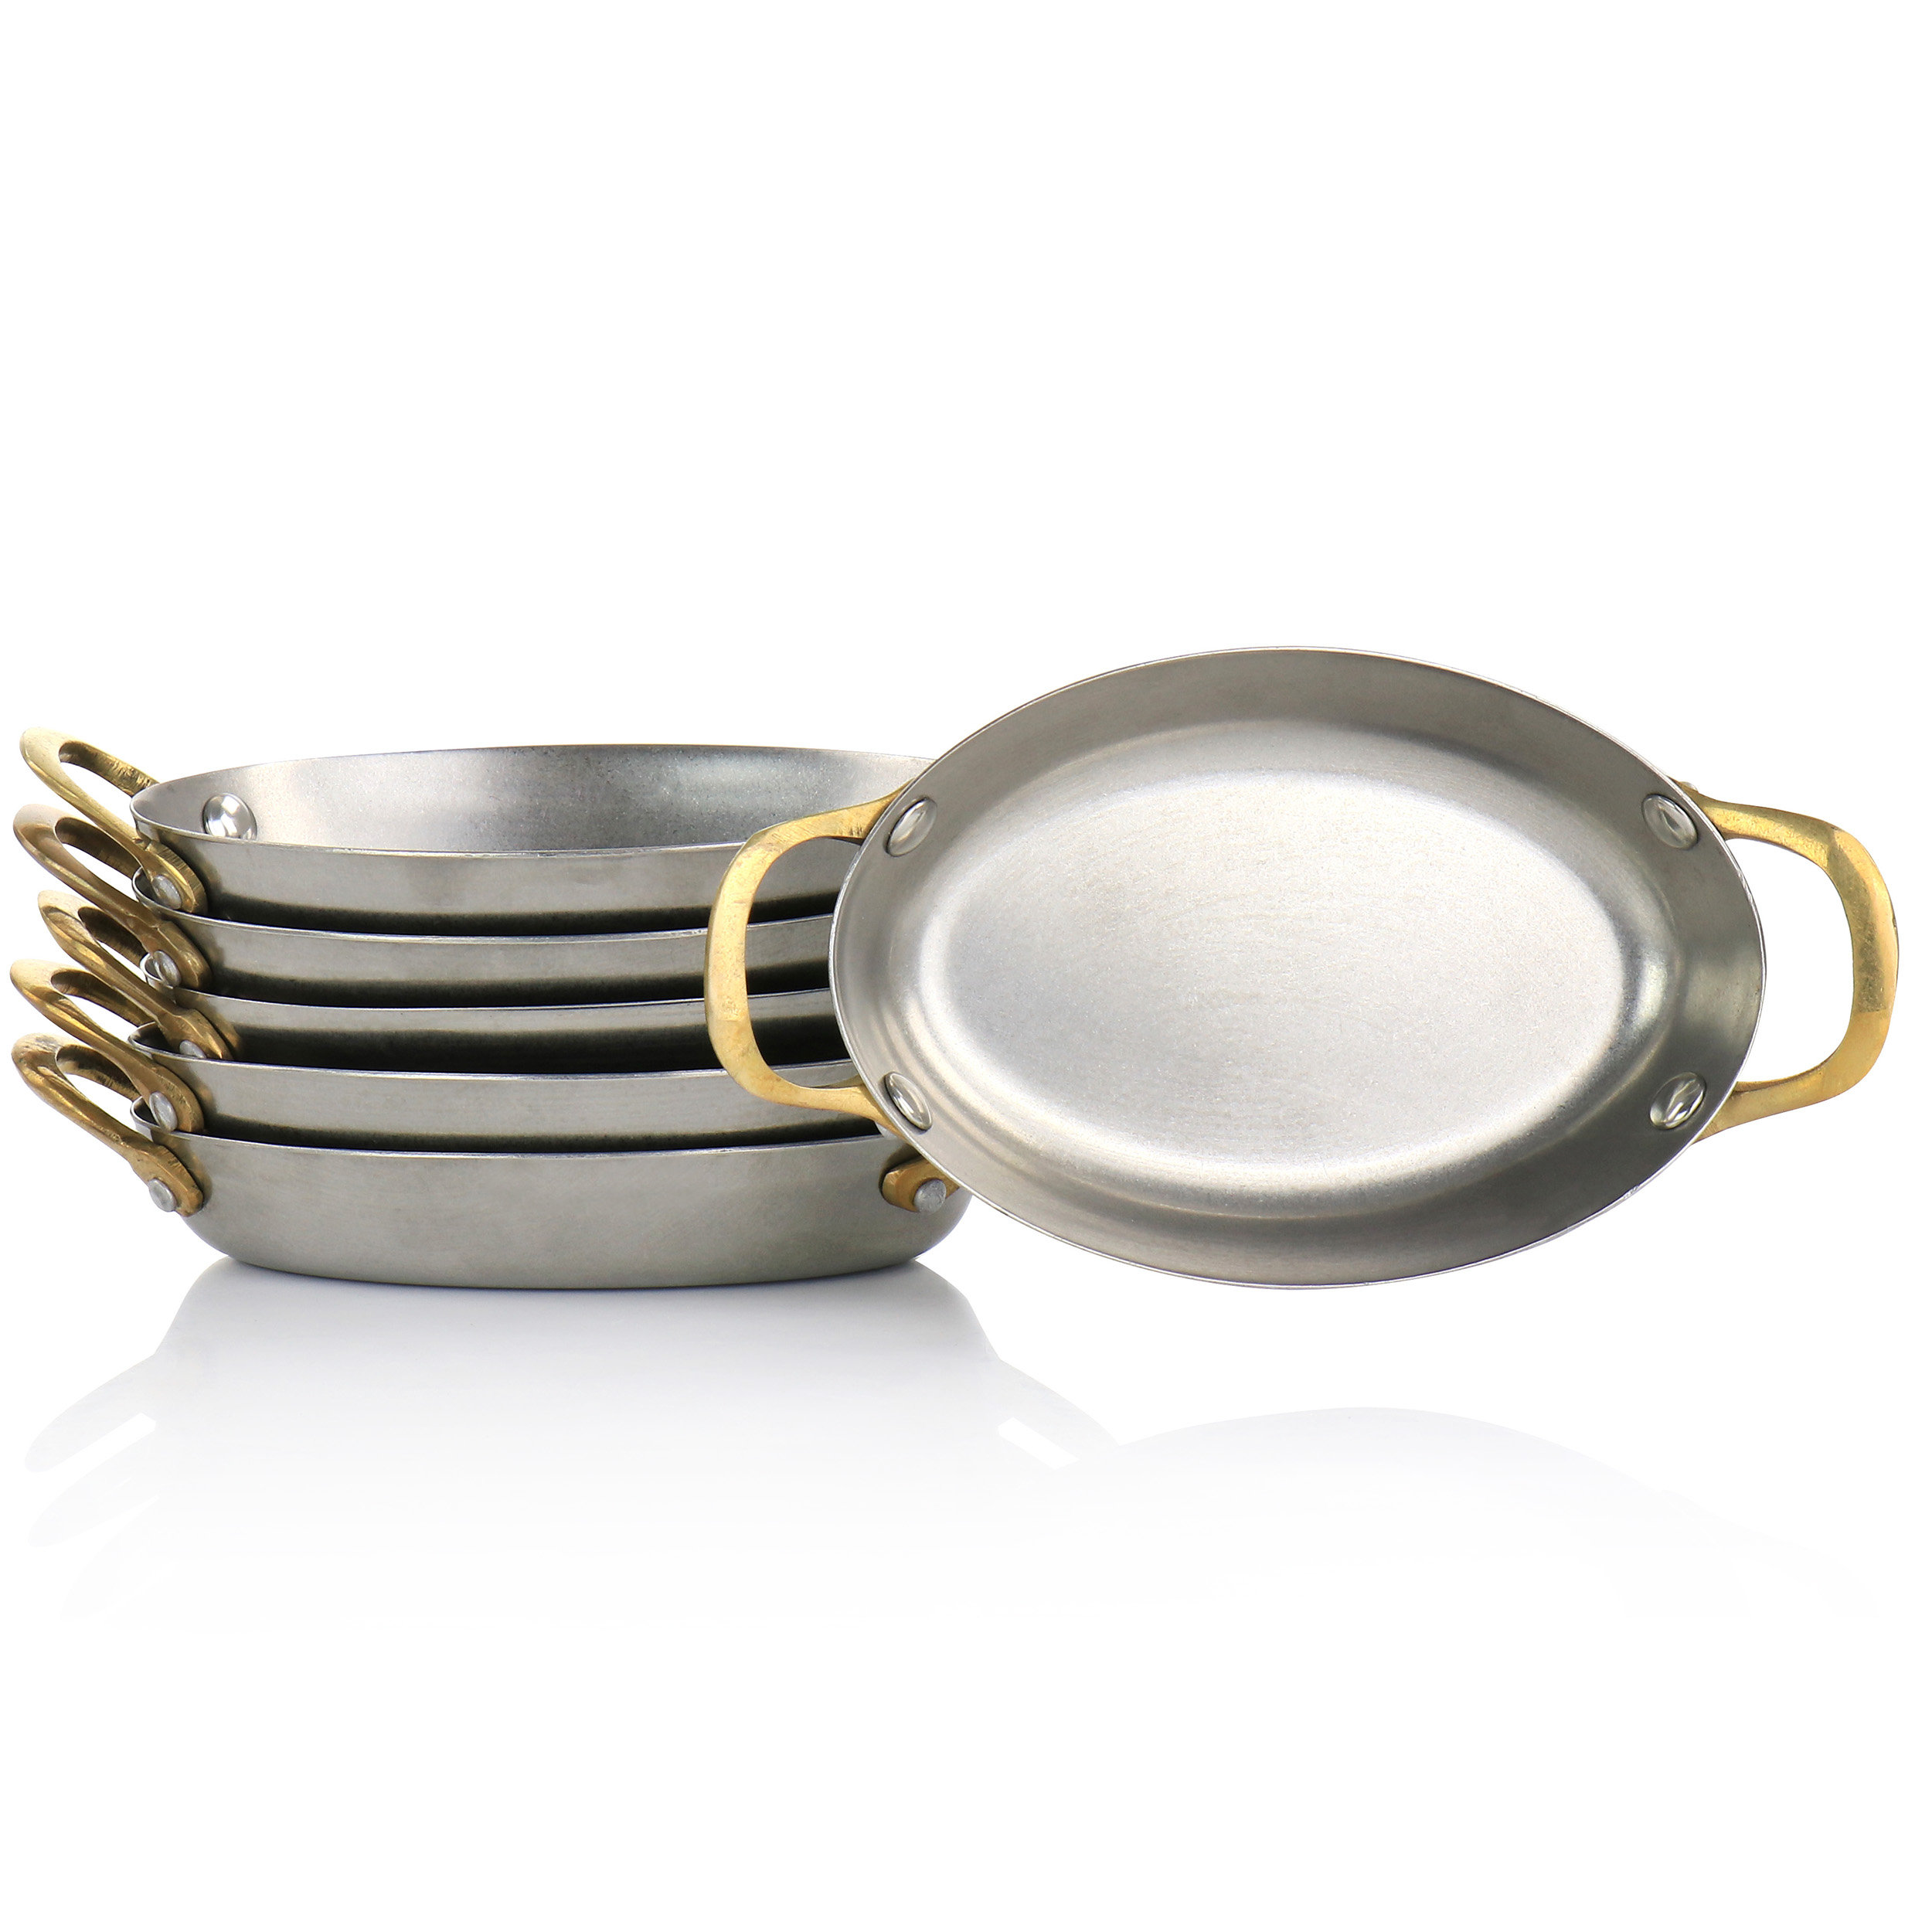 6 Piece Mini Oval Au Gratin Pan Set with Brass Handle